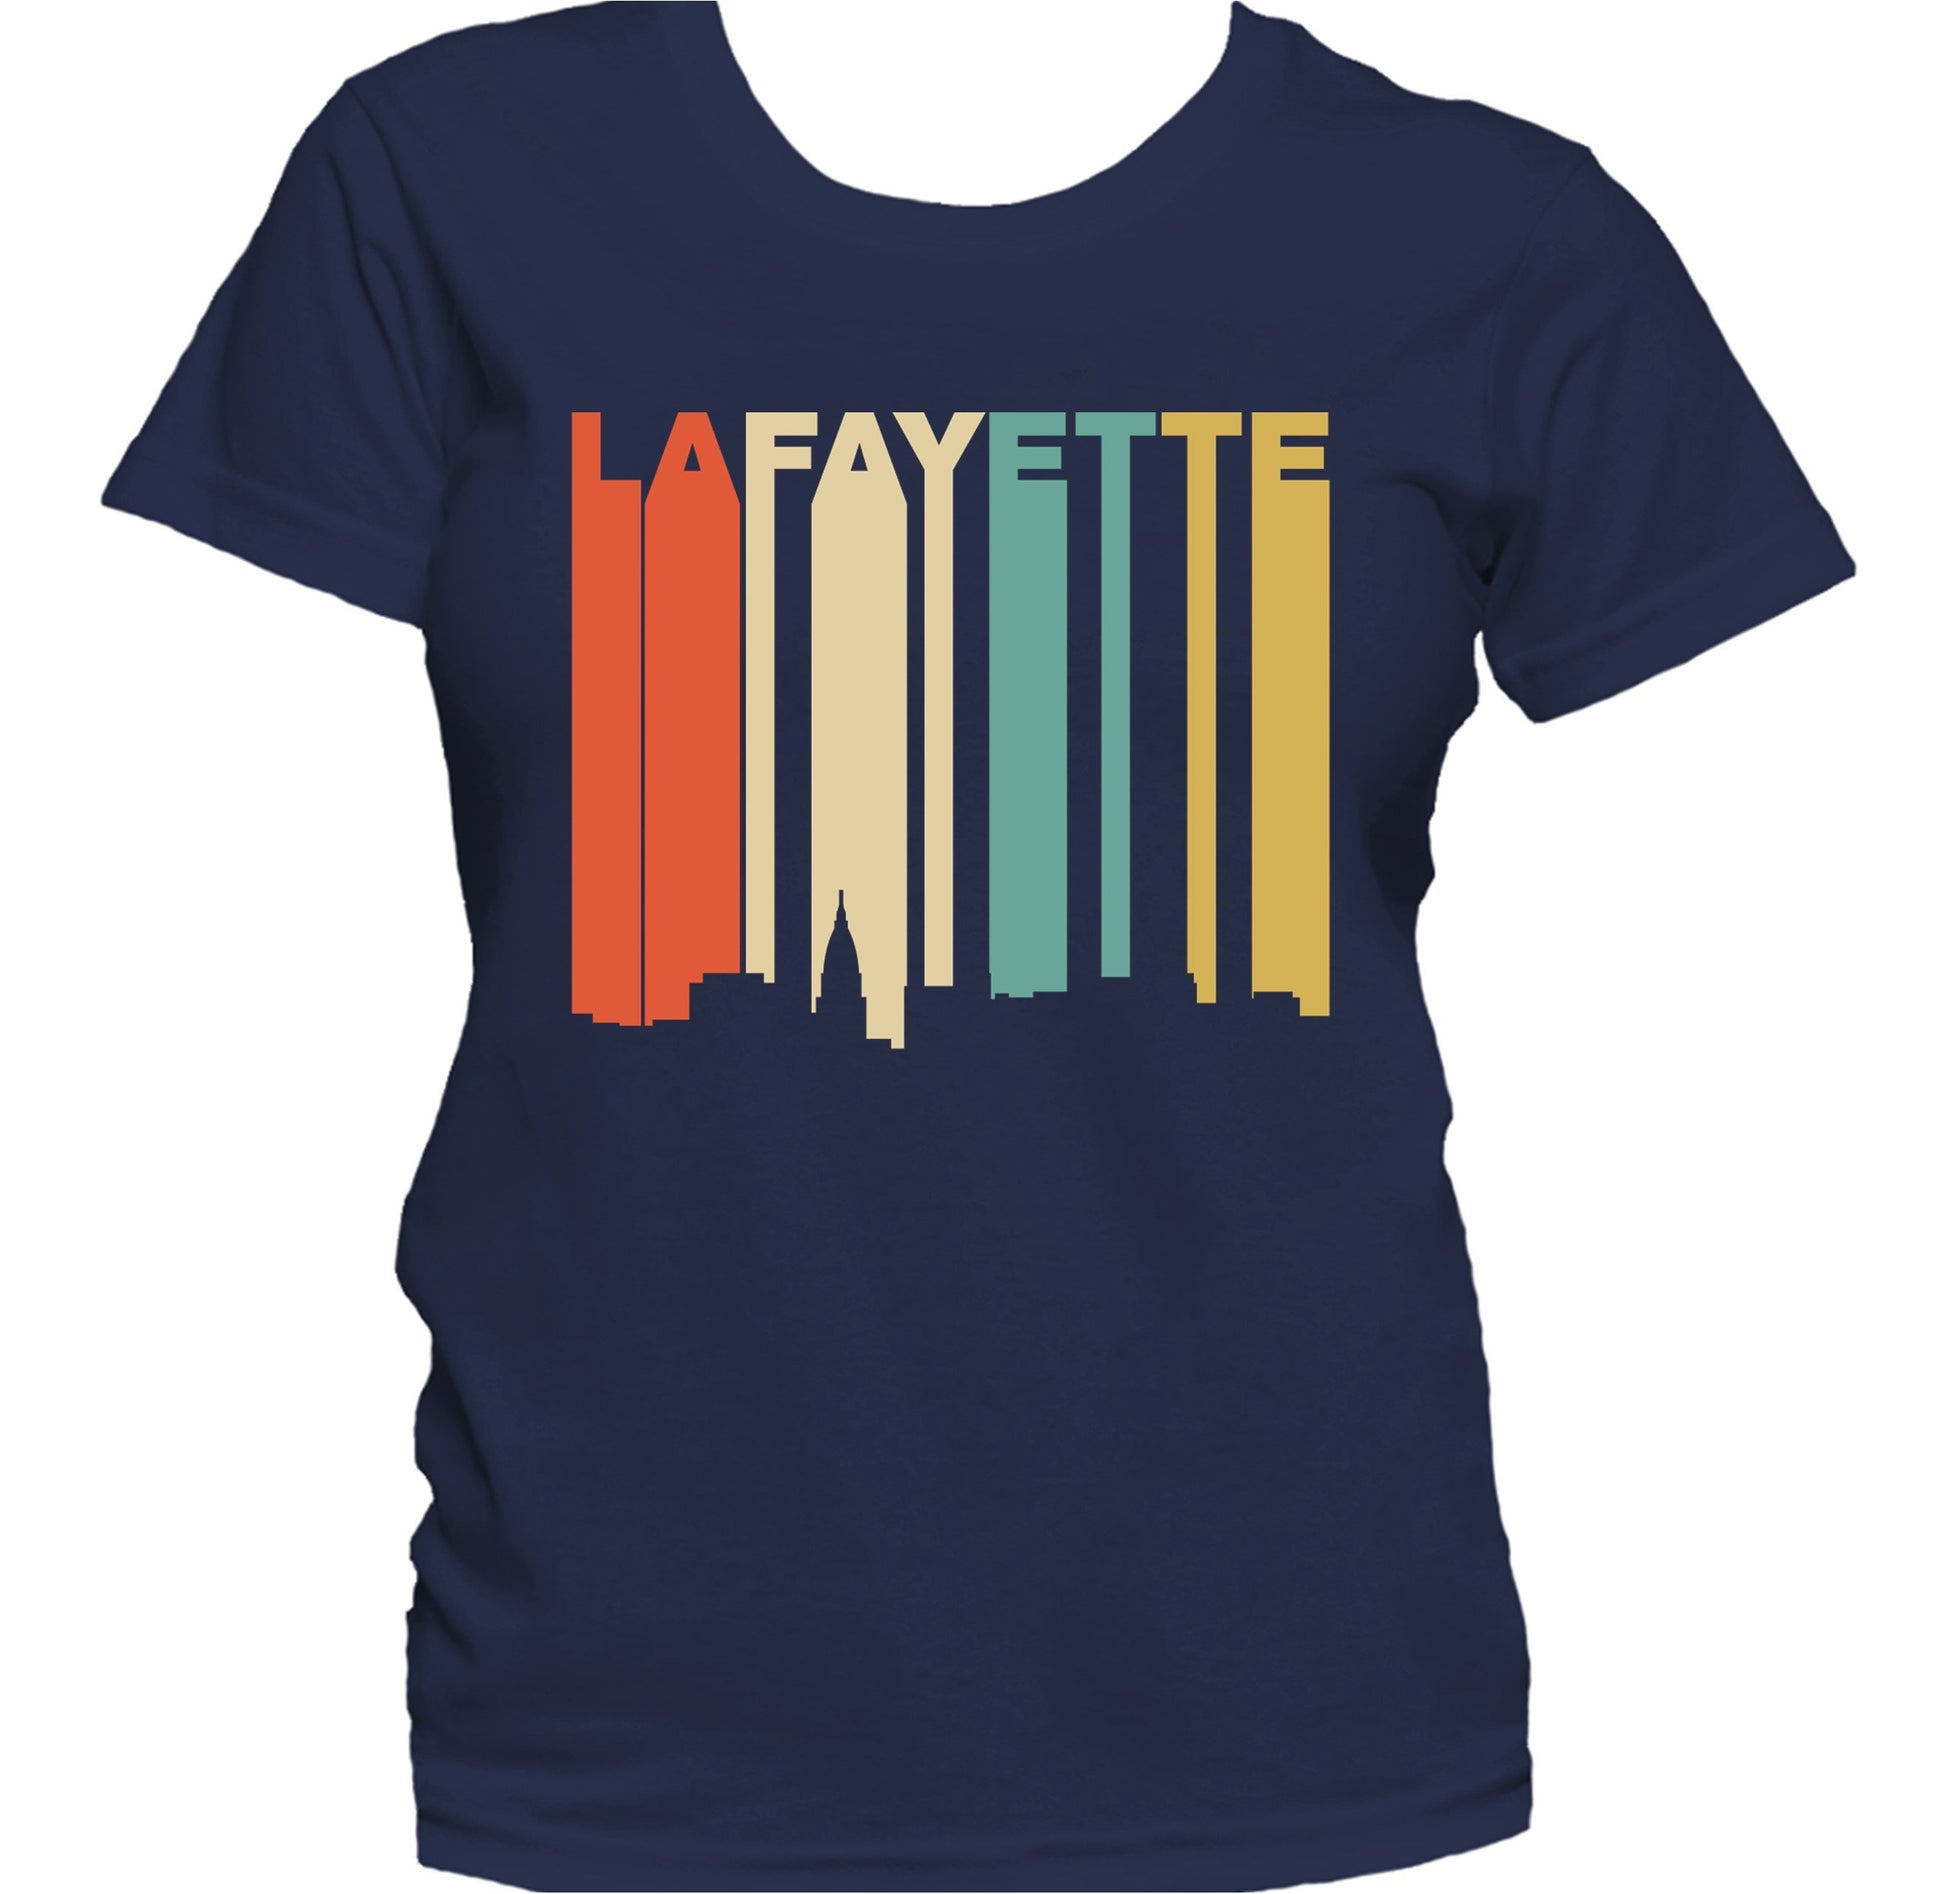 Retro 1970's Style Lafayette Indiana Skyline Women's T-Shirt